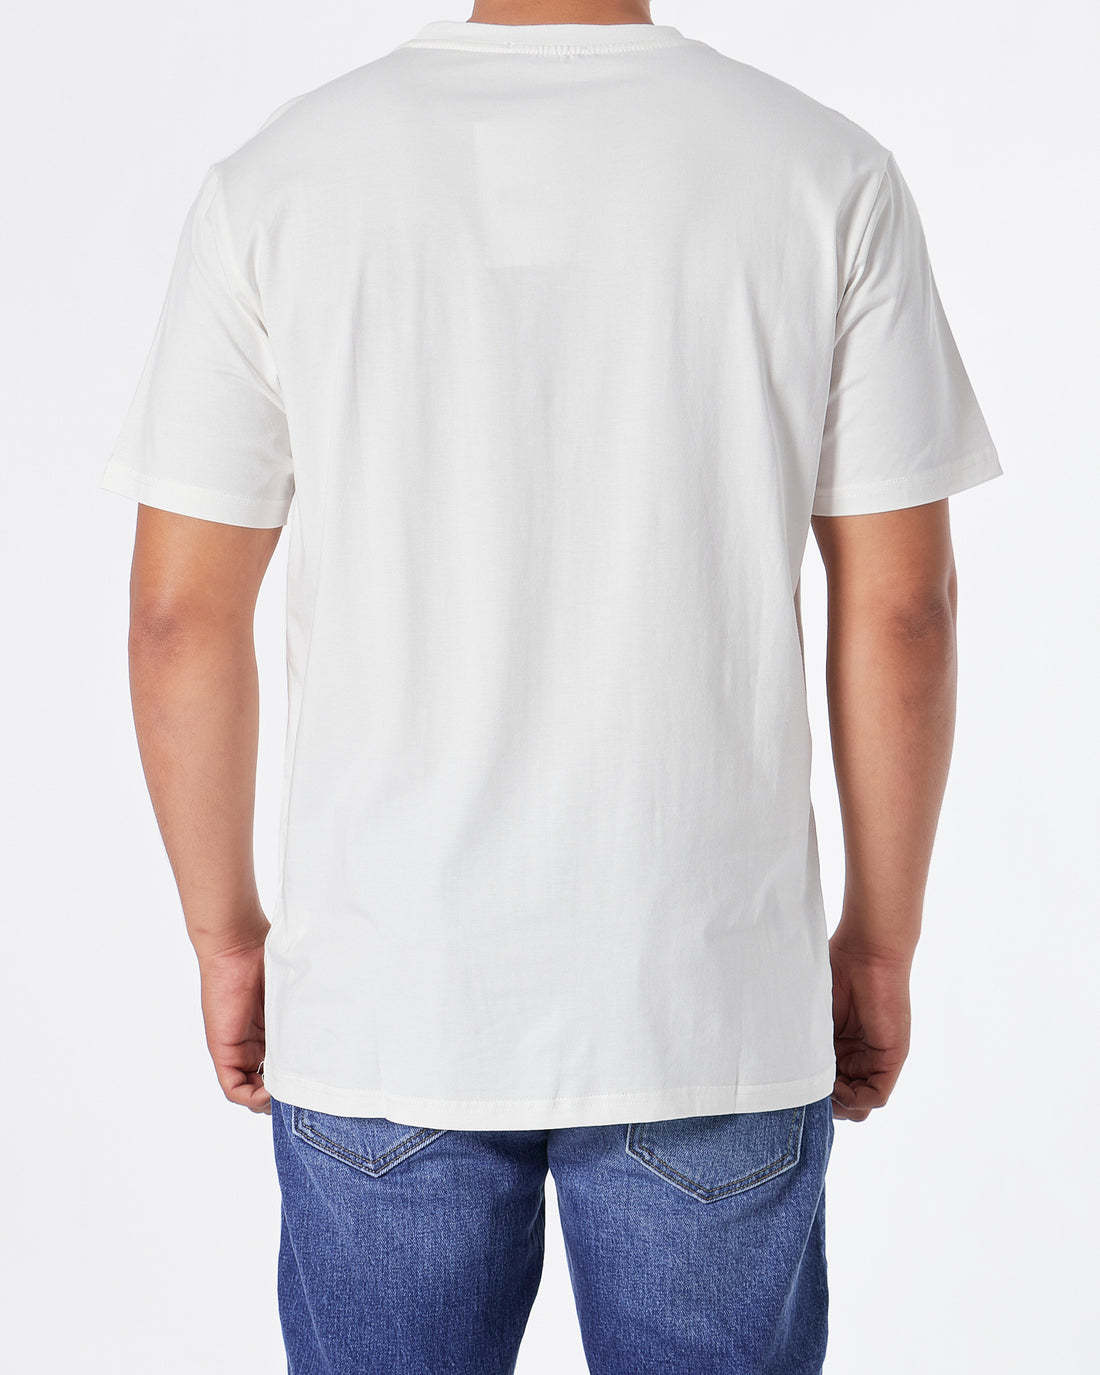 BAM Round Gold Printed Men White T-Shirt 20.90